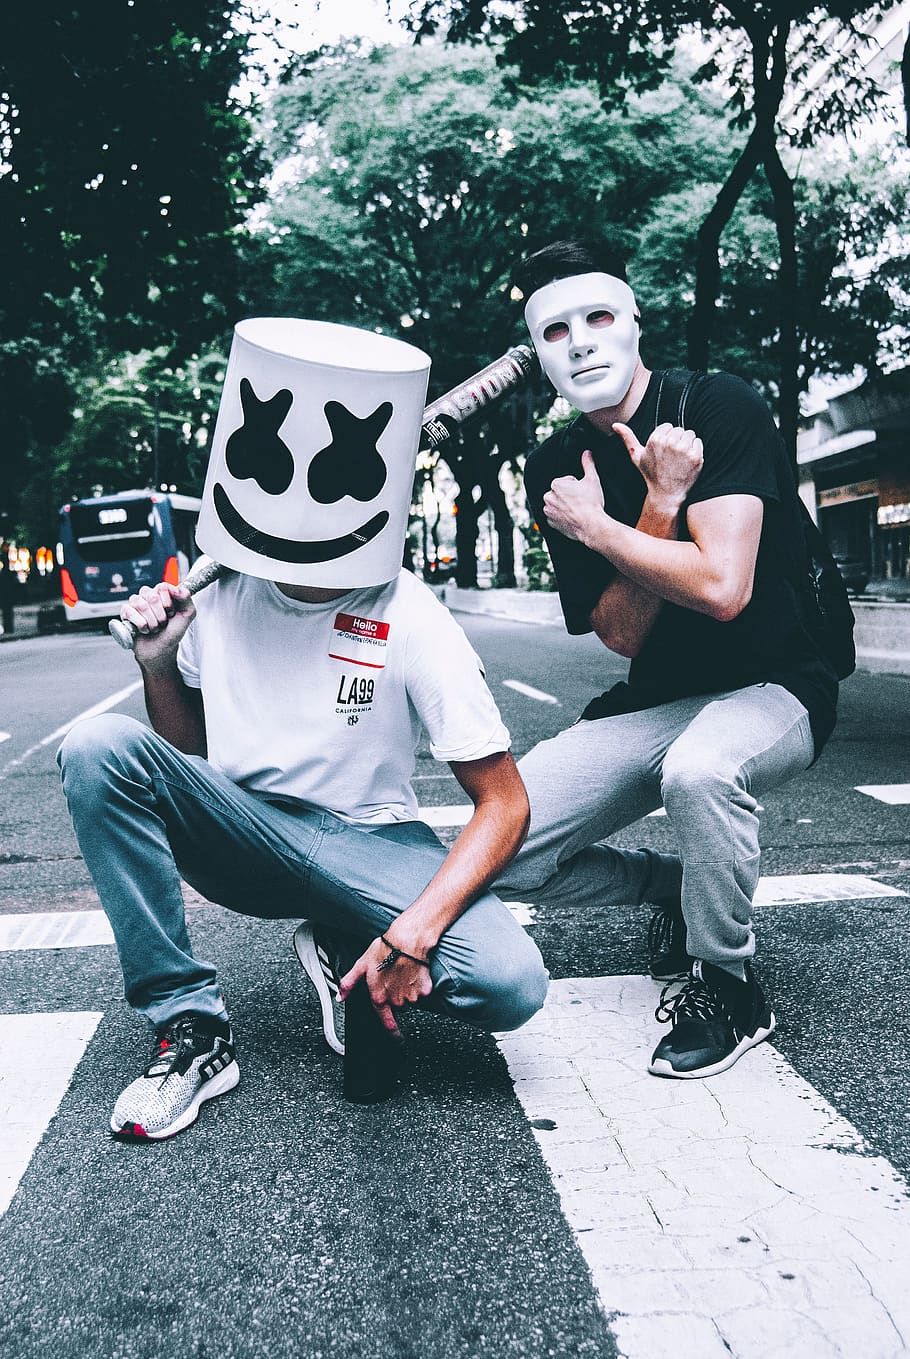 Photo of Two Men in Masks Squat Posing, fun, masked, pedestrian crossing